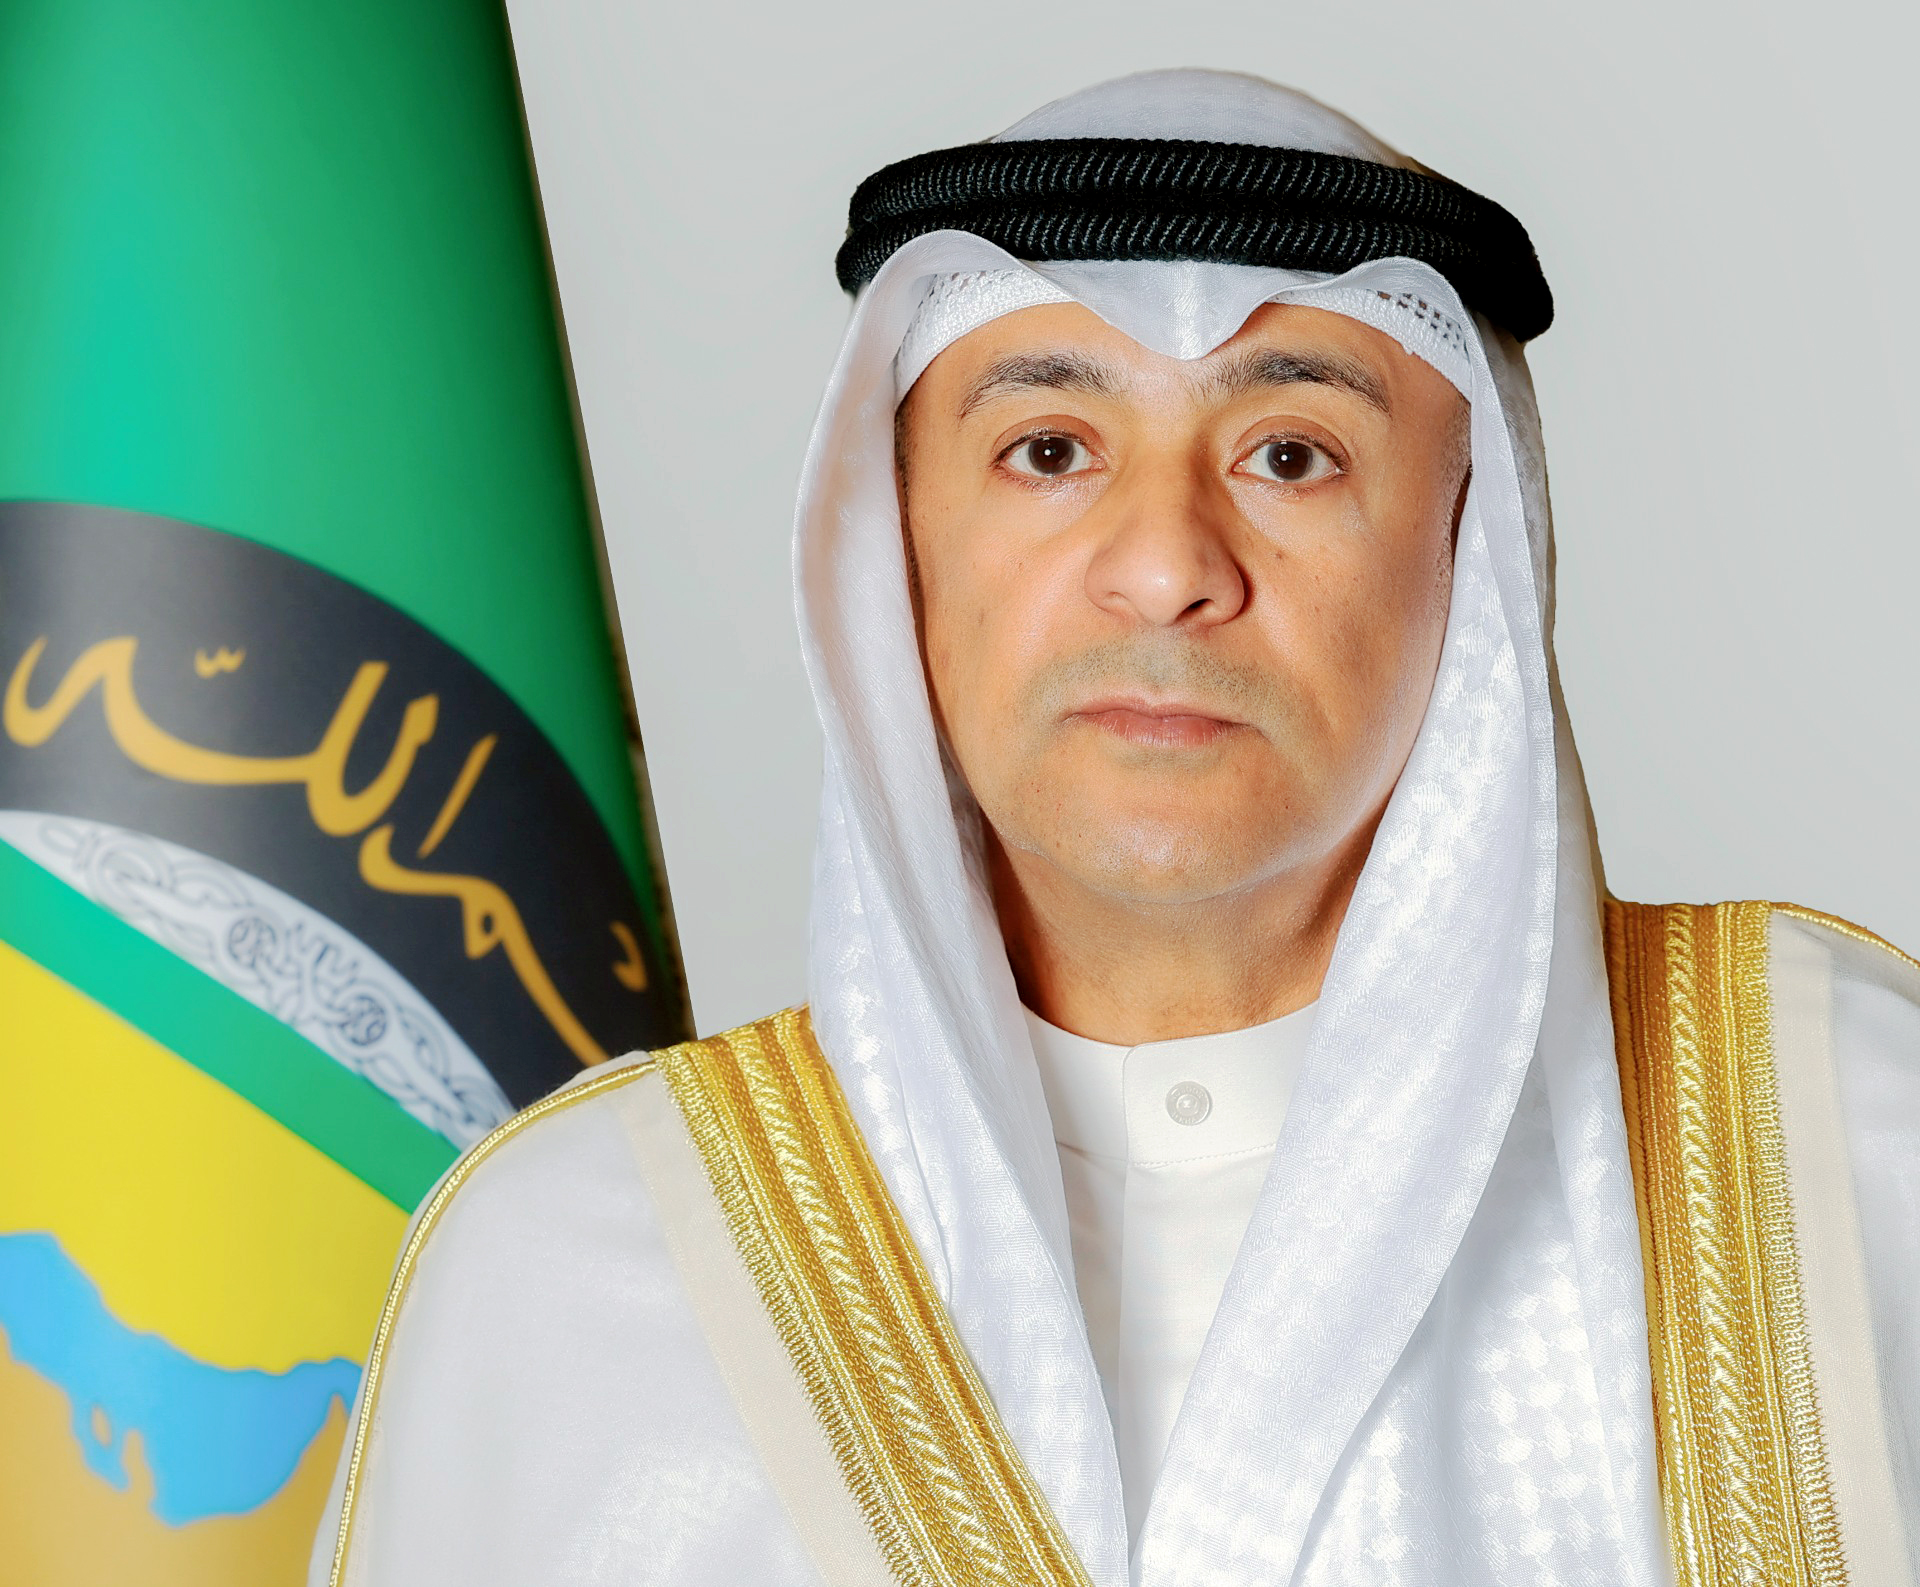 GCC chief Jasem Al-Budaiwi